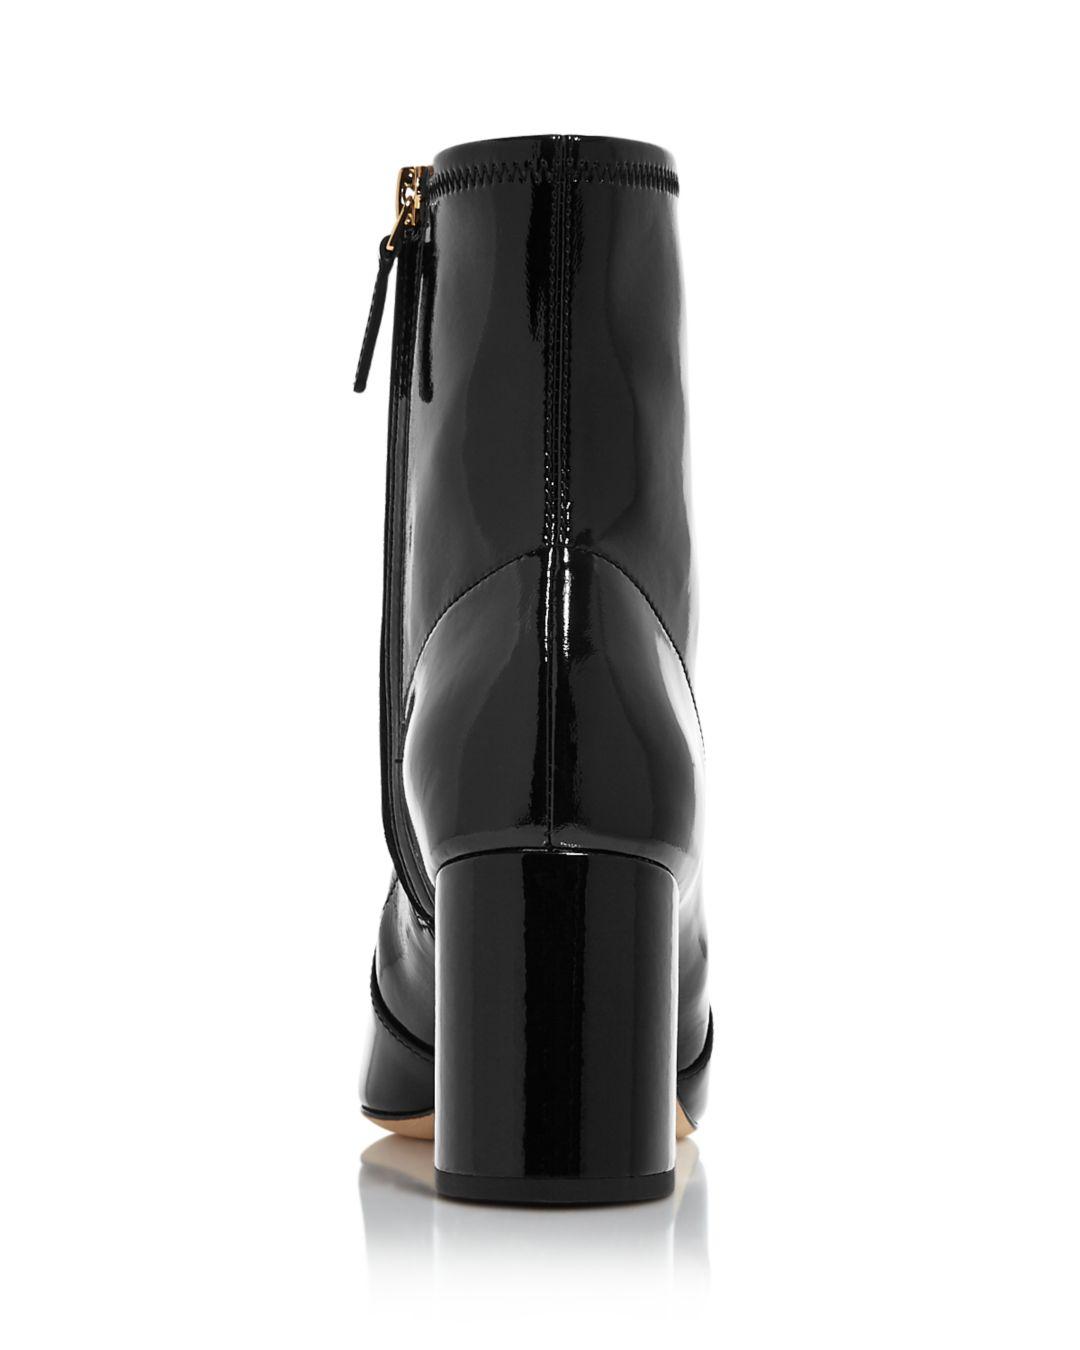 Tory Burch Gigi Stretch Patent Leather Bootie in Black | Lyst